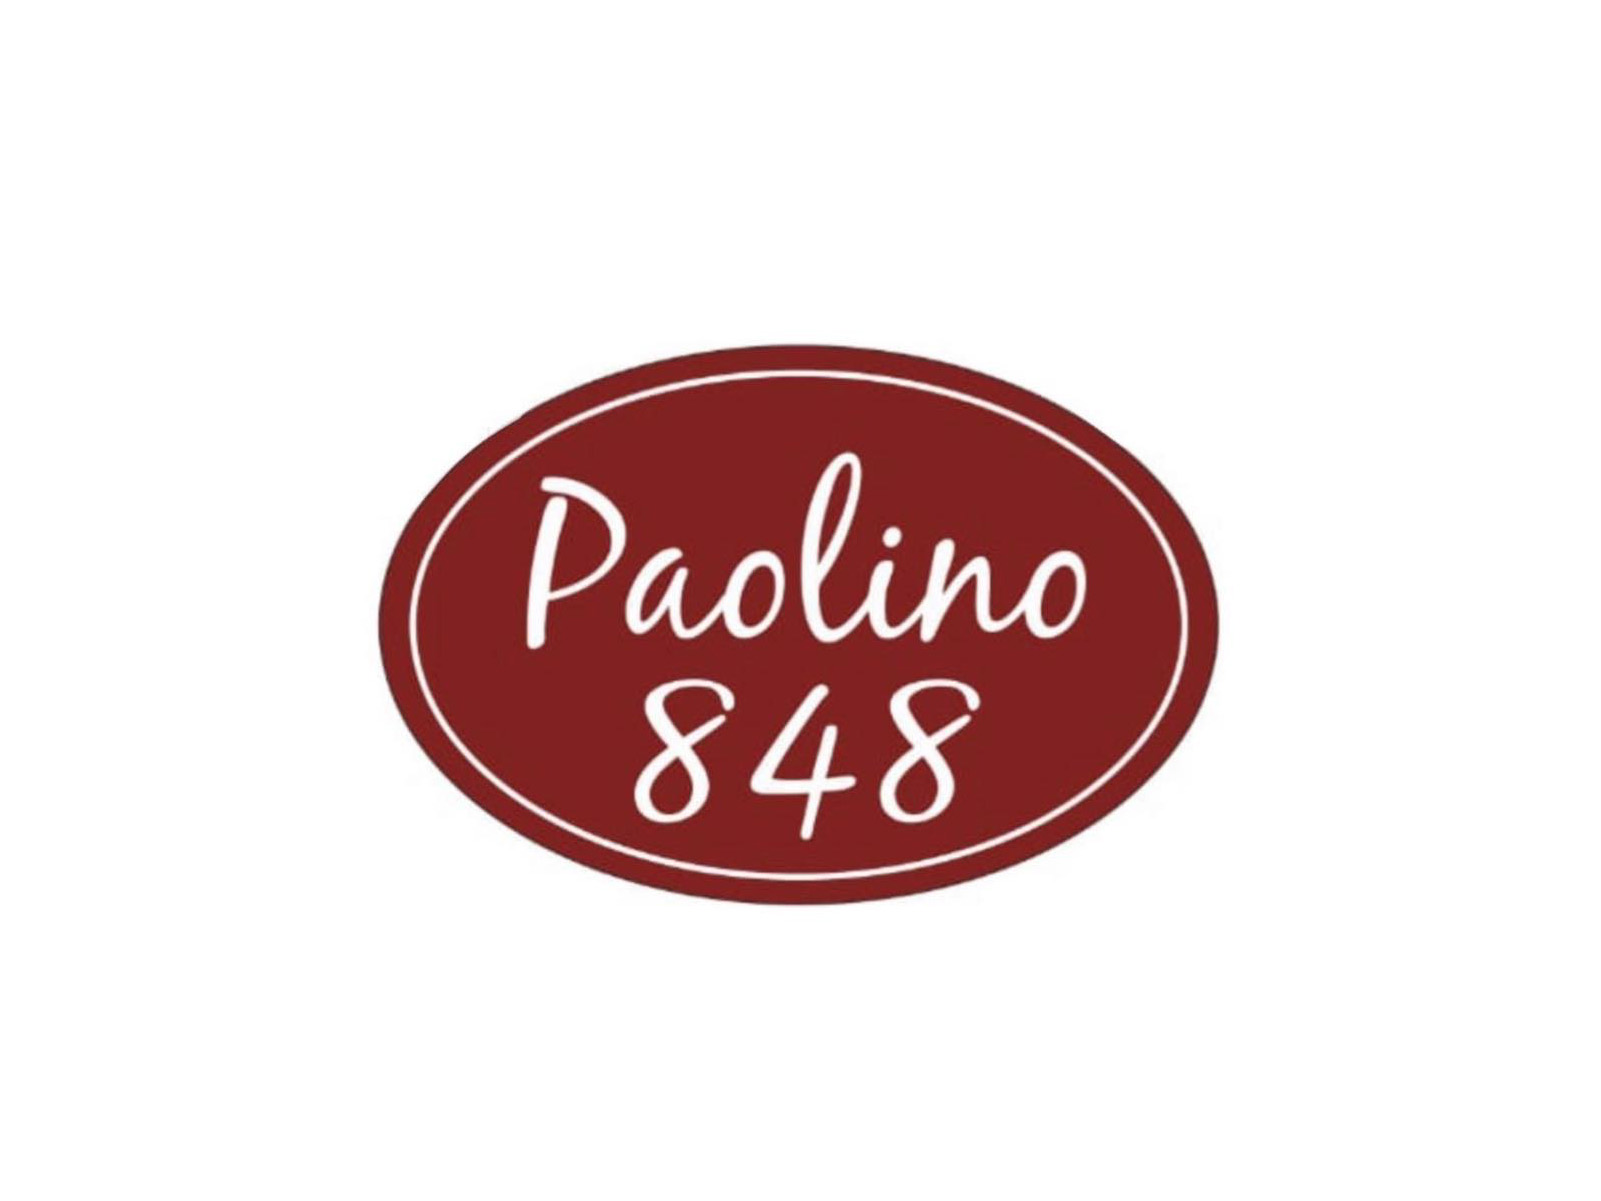 Paolino 848